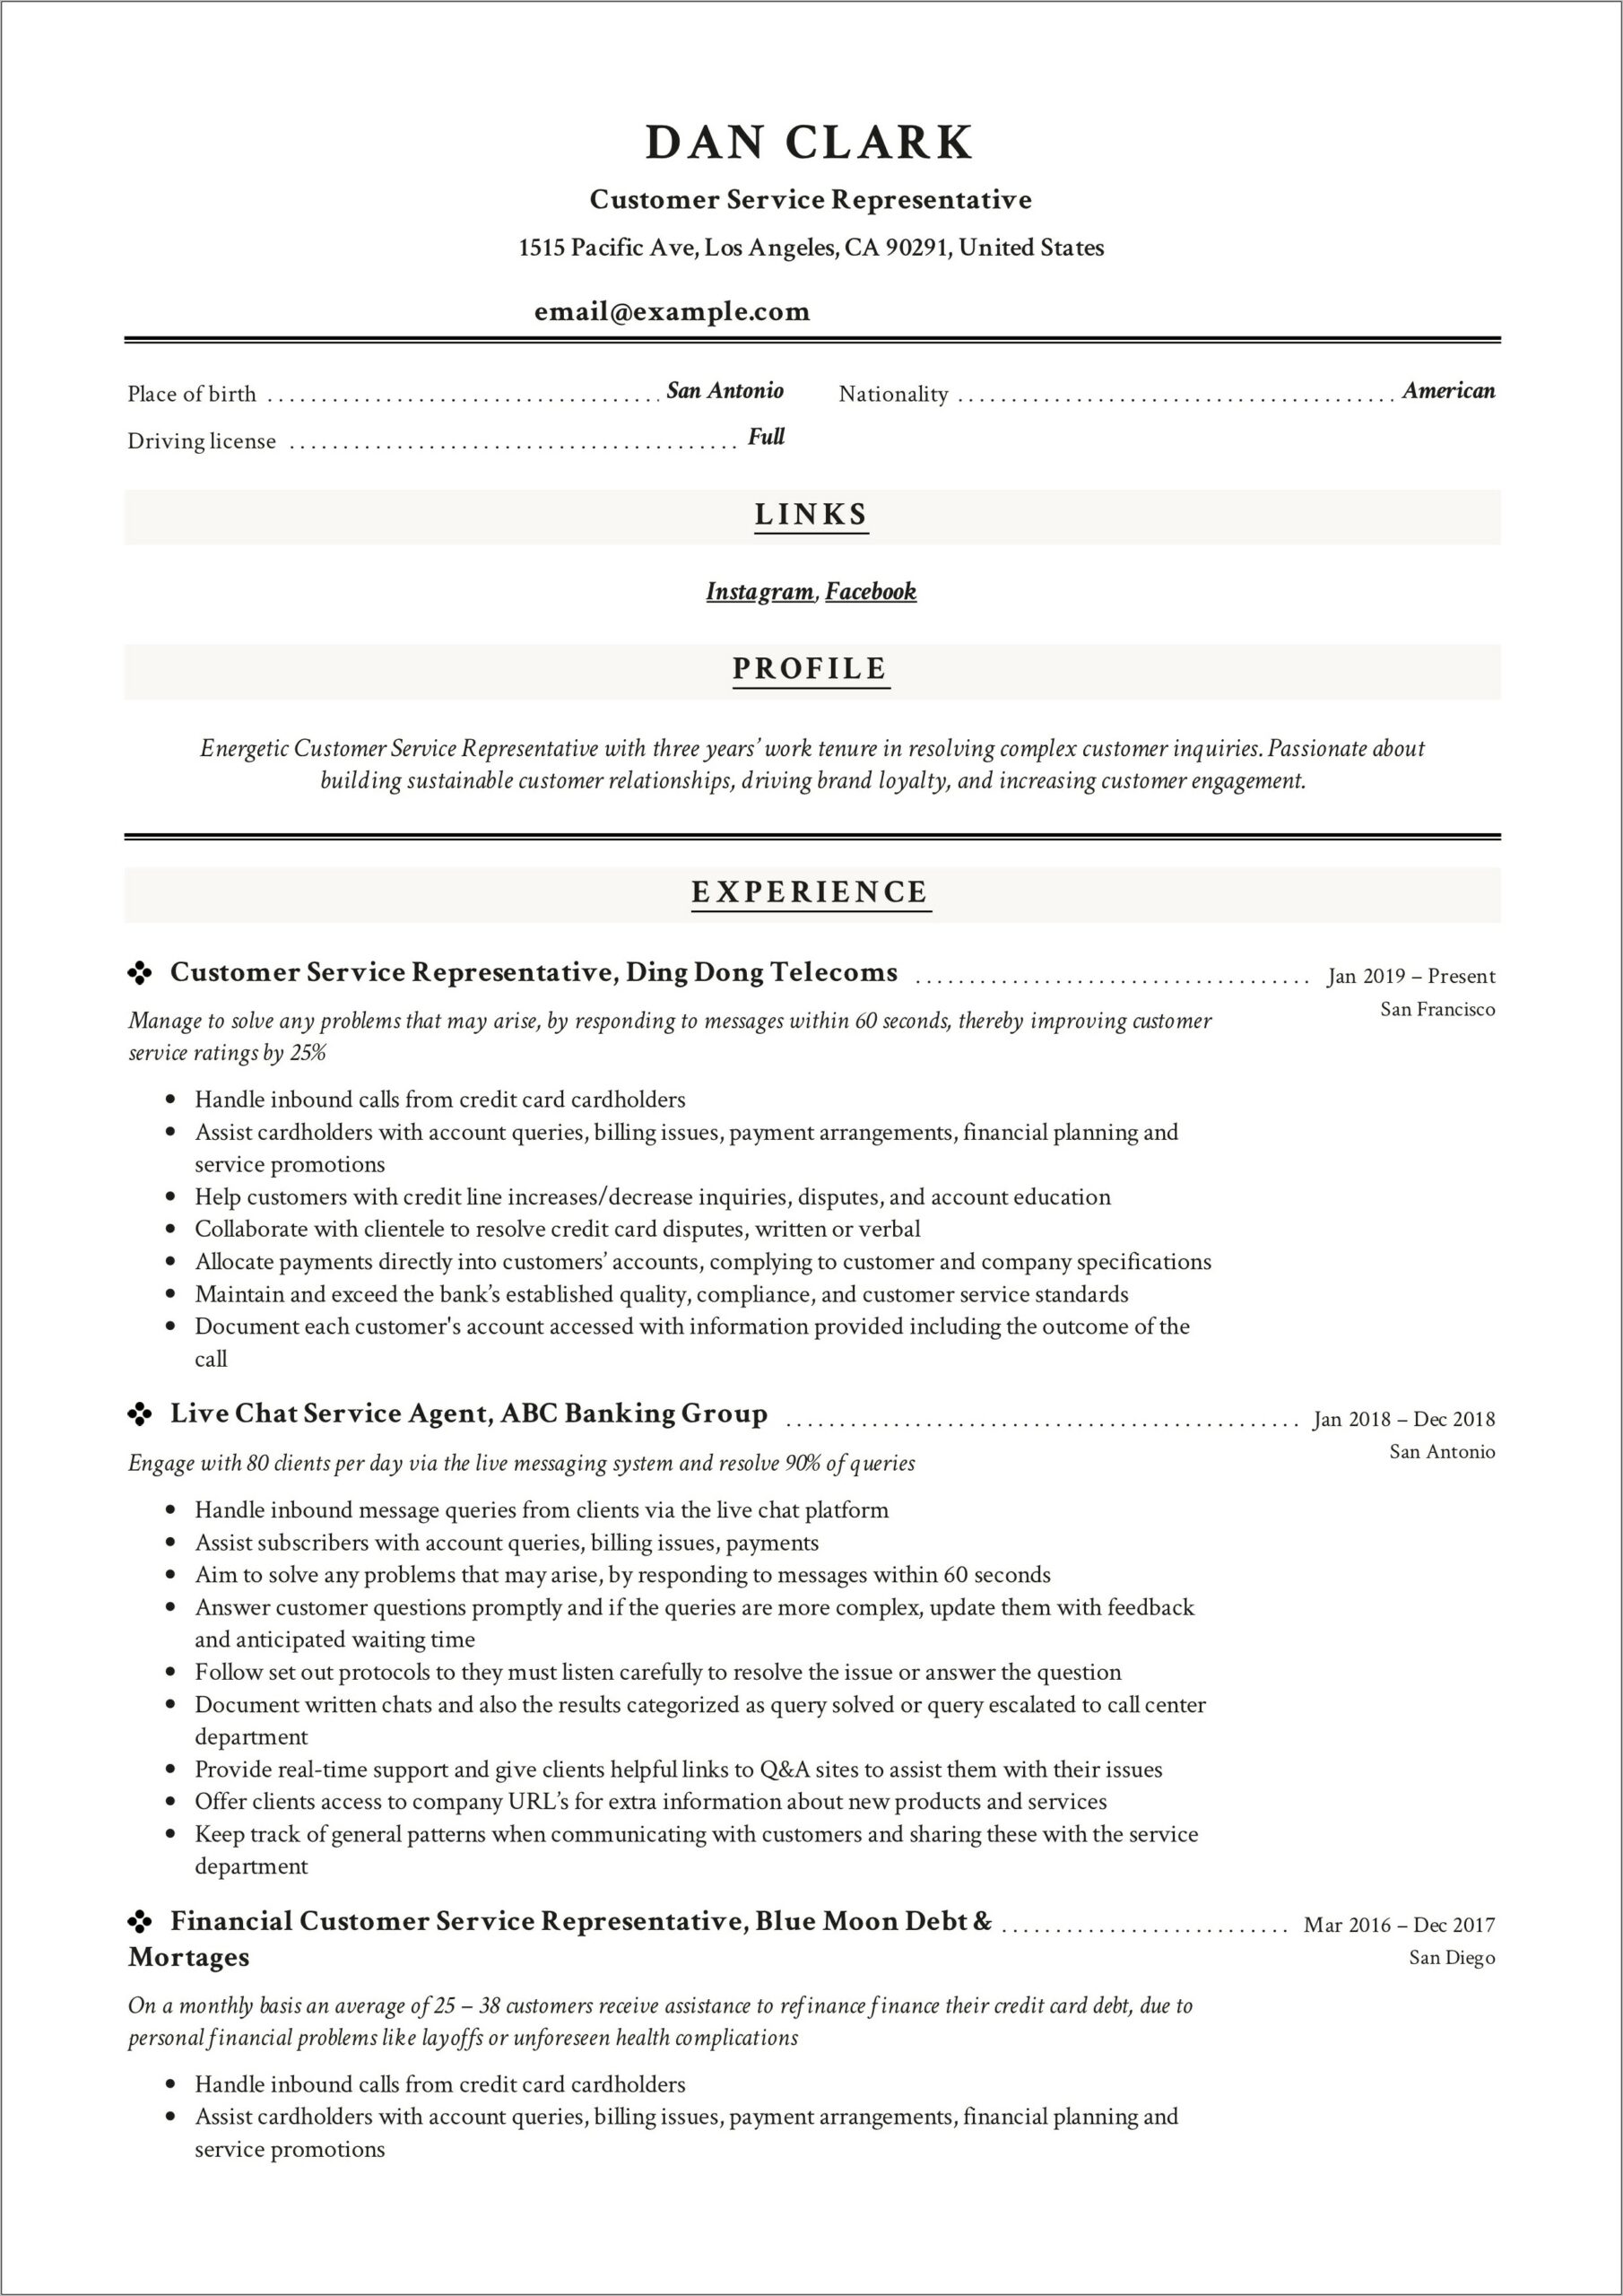 Sample Resume Accomplishments For Senior Customer Service Representative